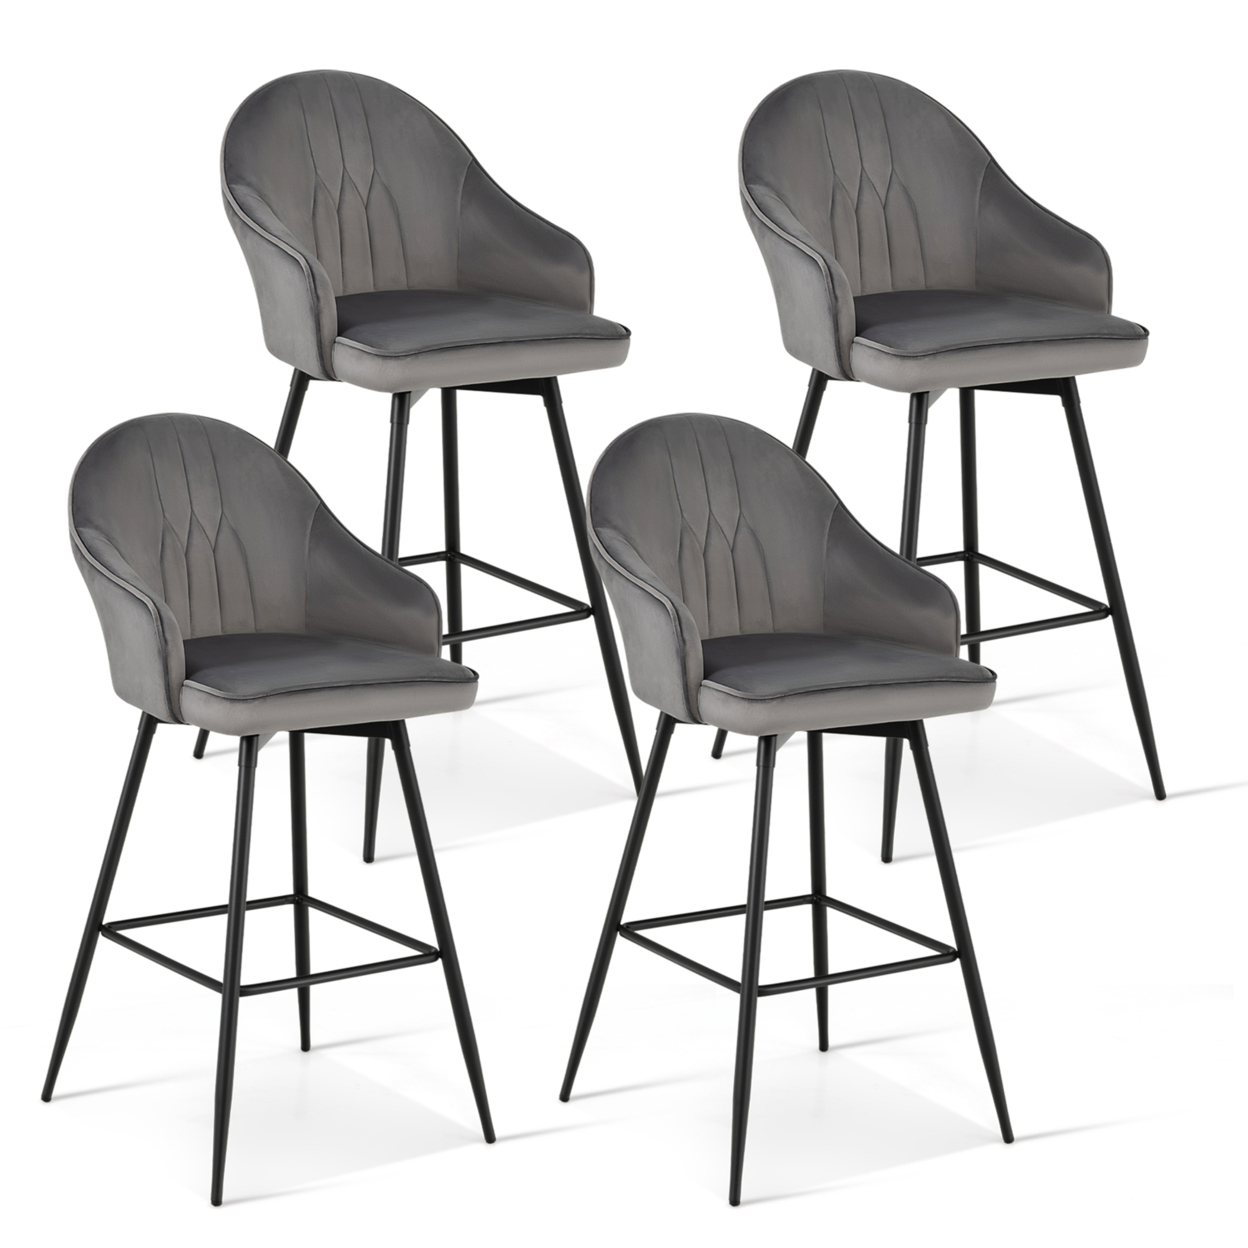 Set Of 4 Velvet Bar Stools Swivel Pub Height Dining Chairs W/ Metal Legs Gray